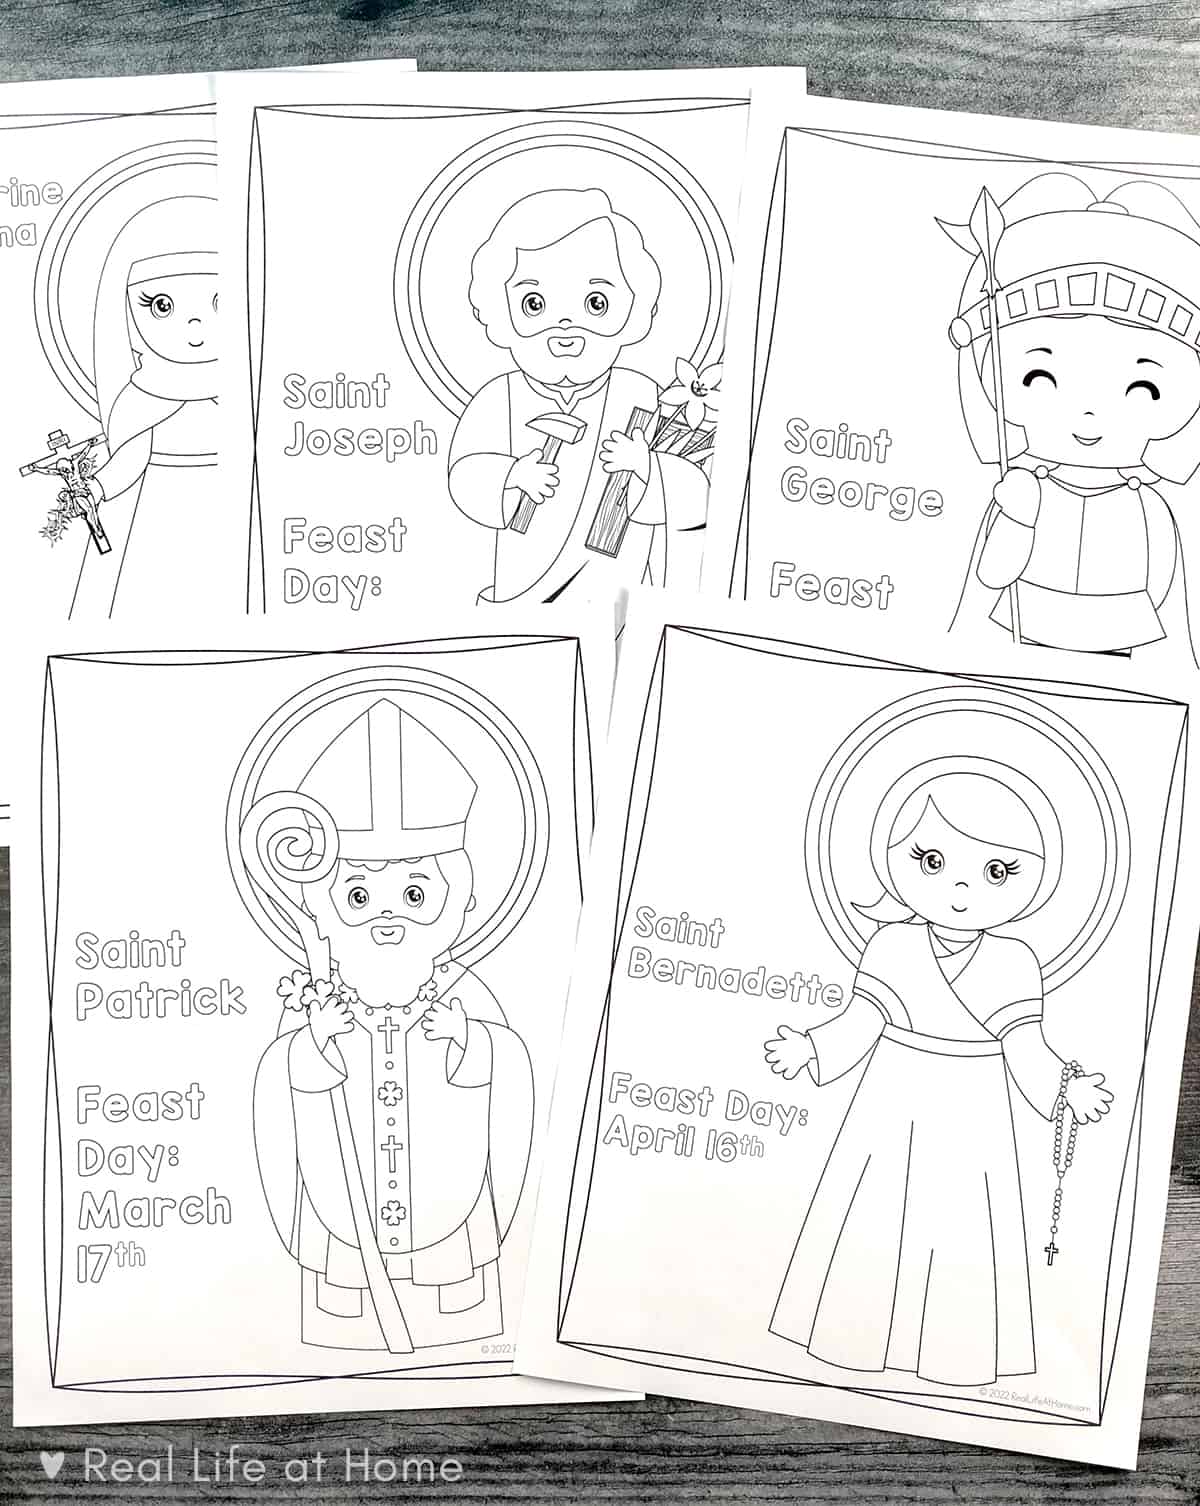 Catholic Saint Coloring Pages